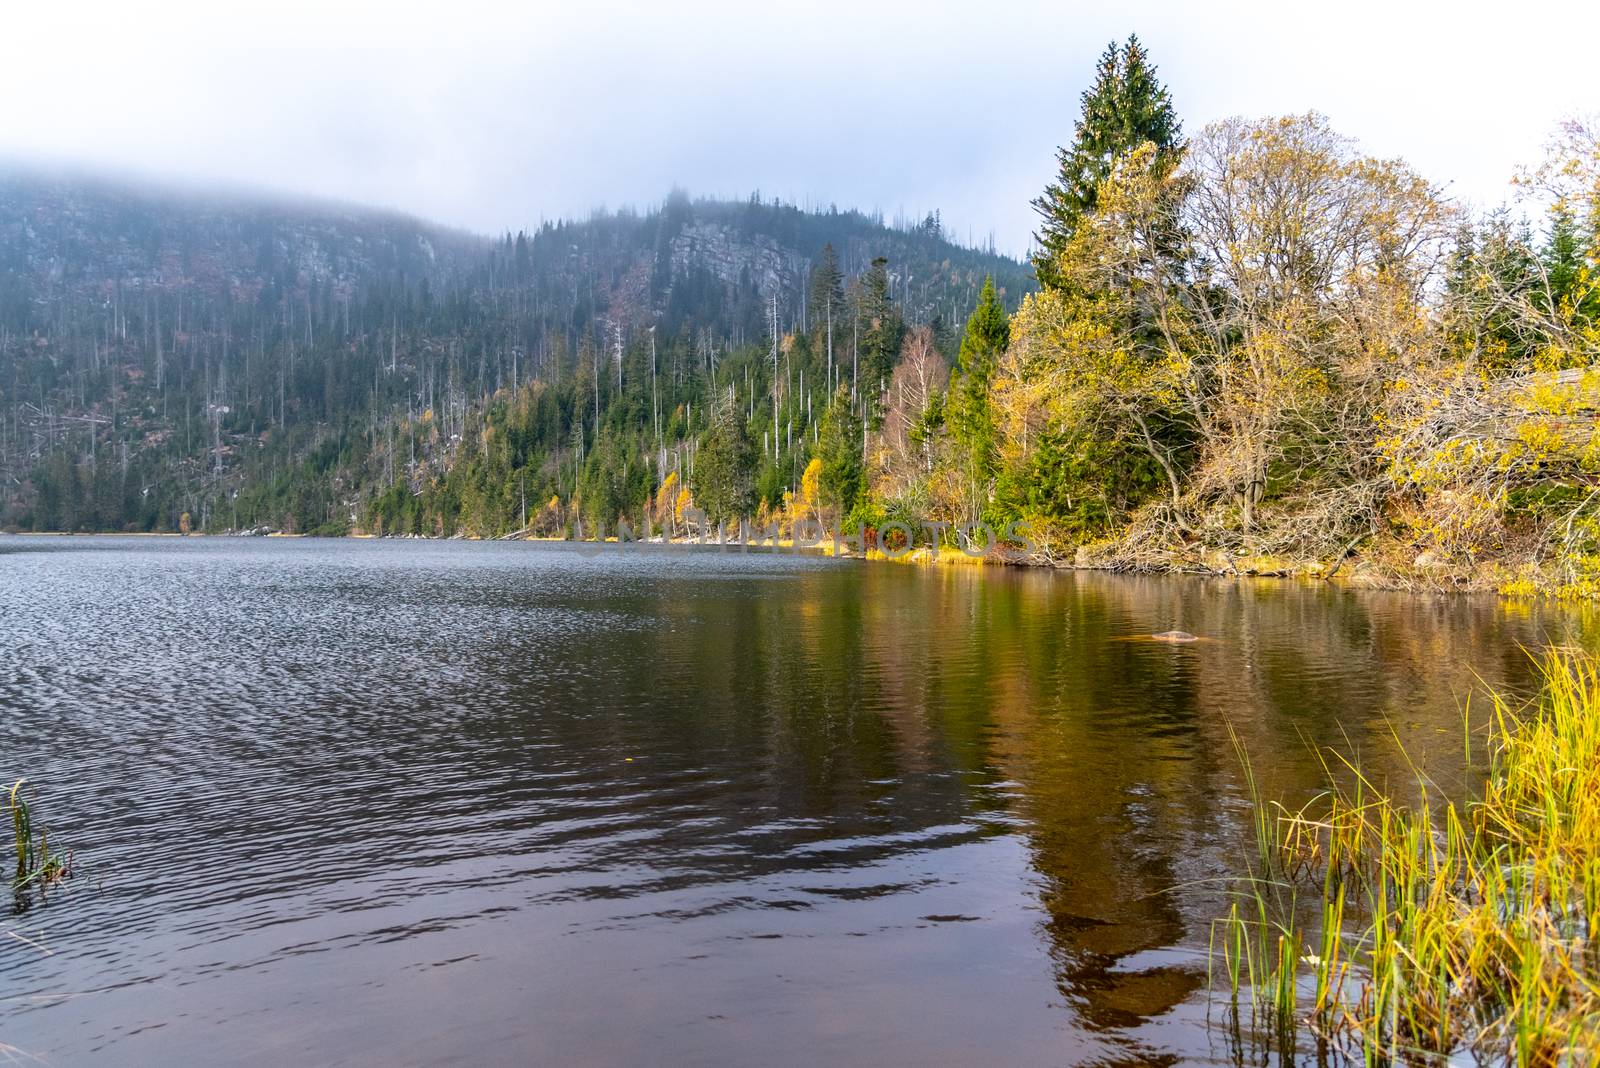 Plesne Lake and Plechy Mountain in autumn. Sumava National Park, Czech Republic.